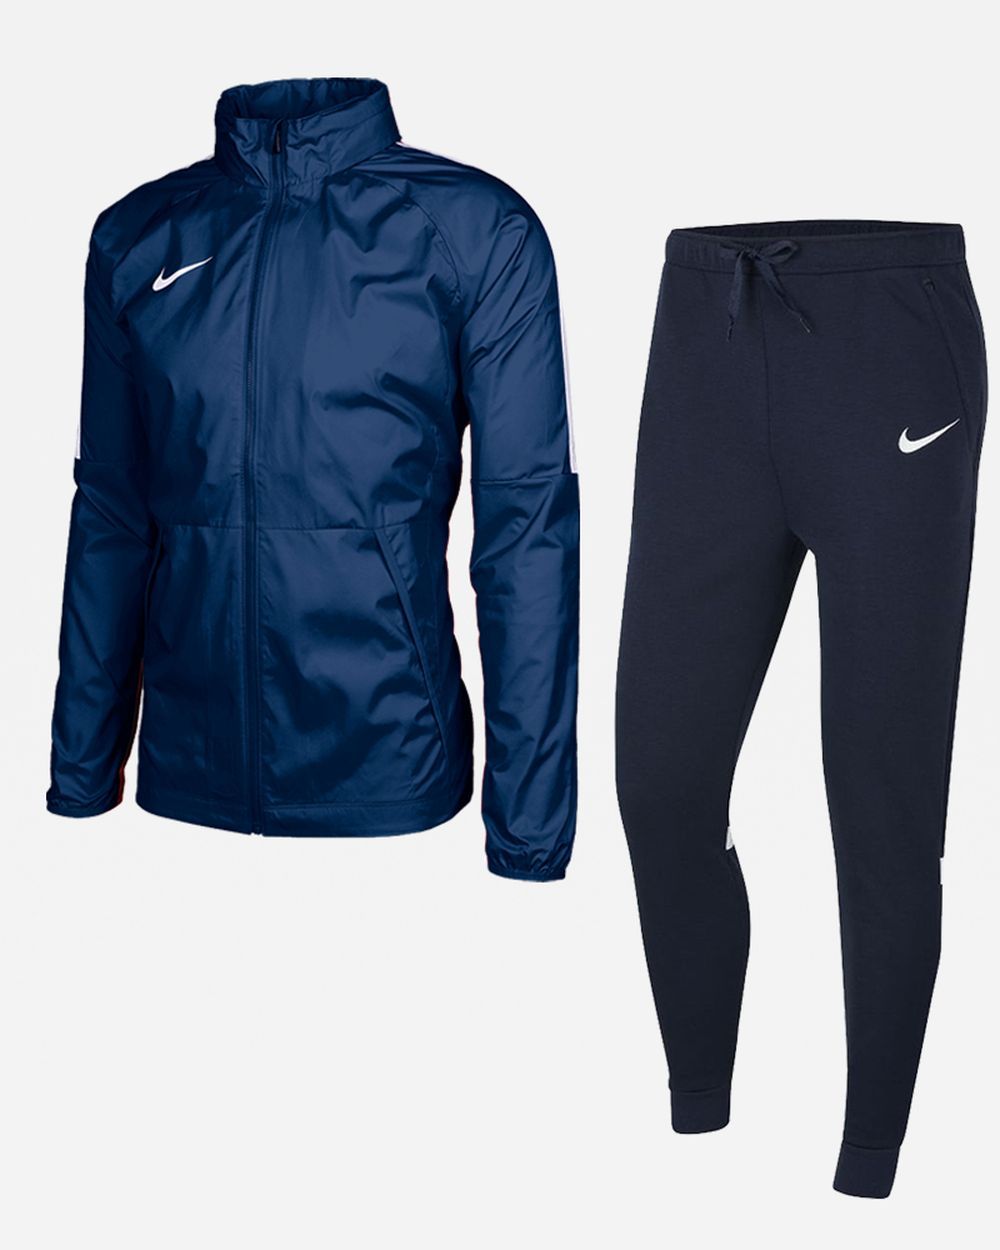 Kit Nike Strike 21 for Men. Rain jacket – Training pant